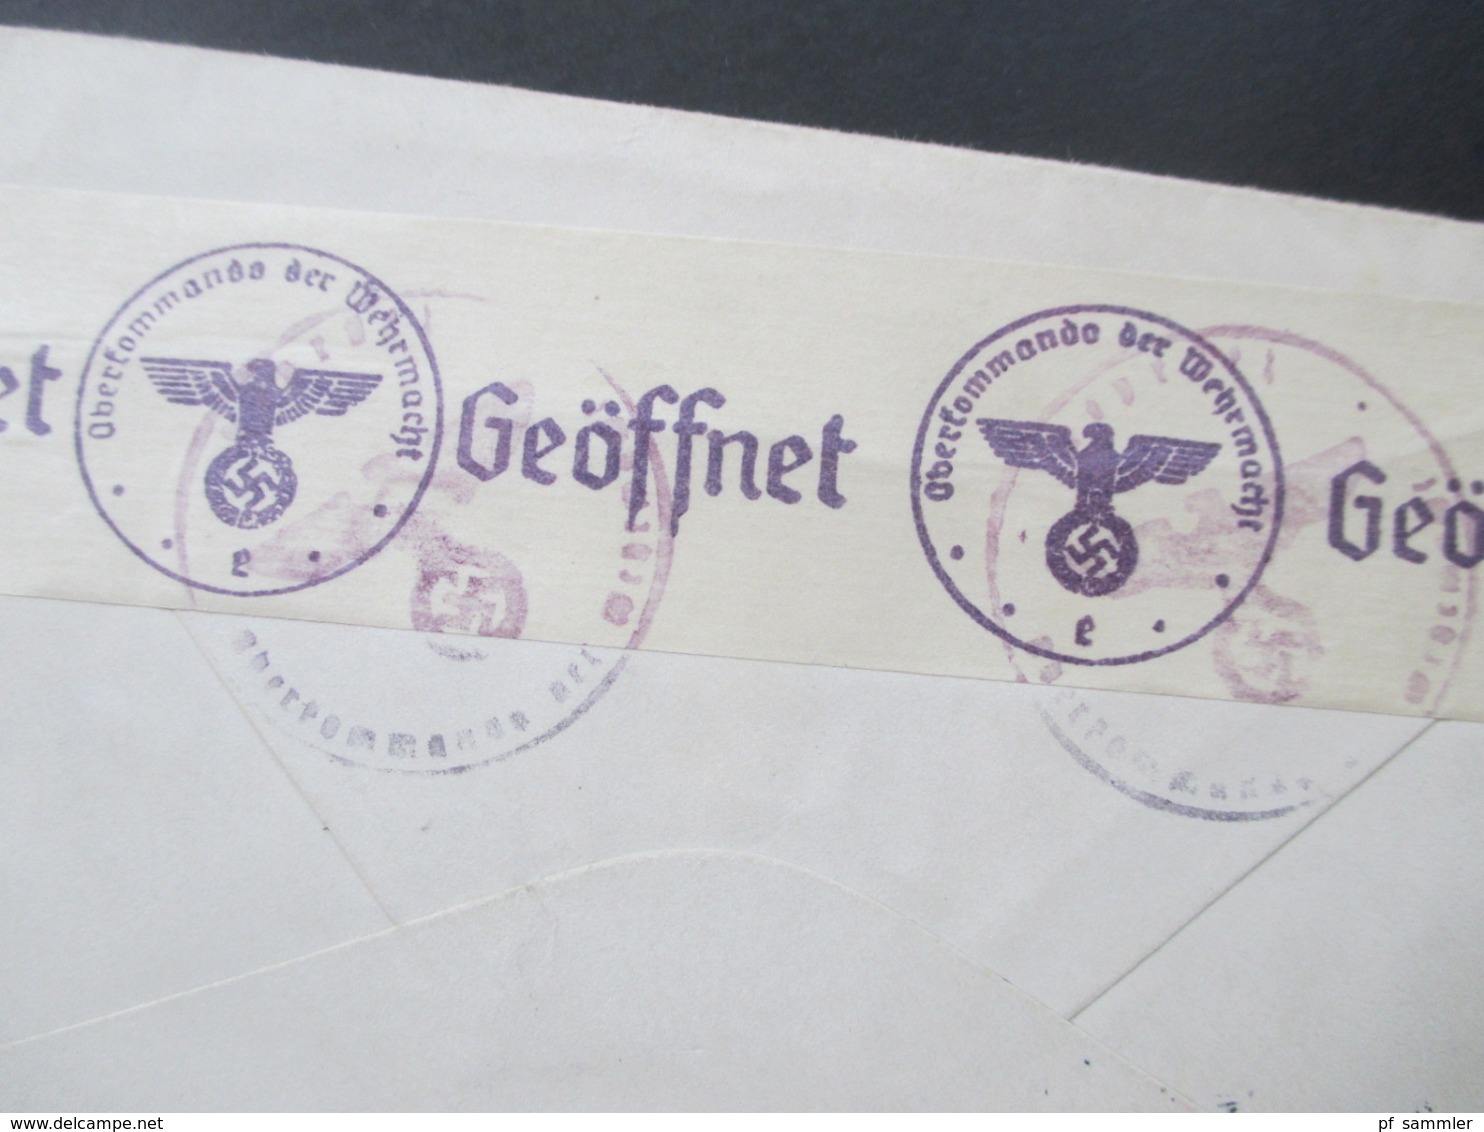 USA 1940 Luftpost / Trans Atlantic Air Mail Zensurbeleg OKW Nach Freiburg Aufkleber Par Avion / By Air Mail - Briefe U. Dokumente